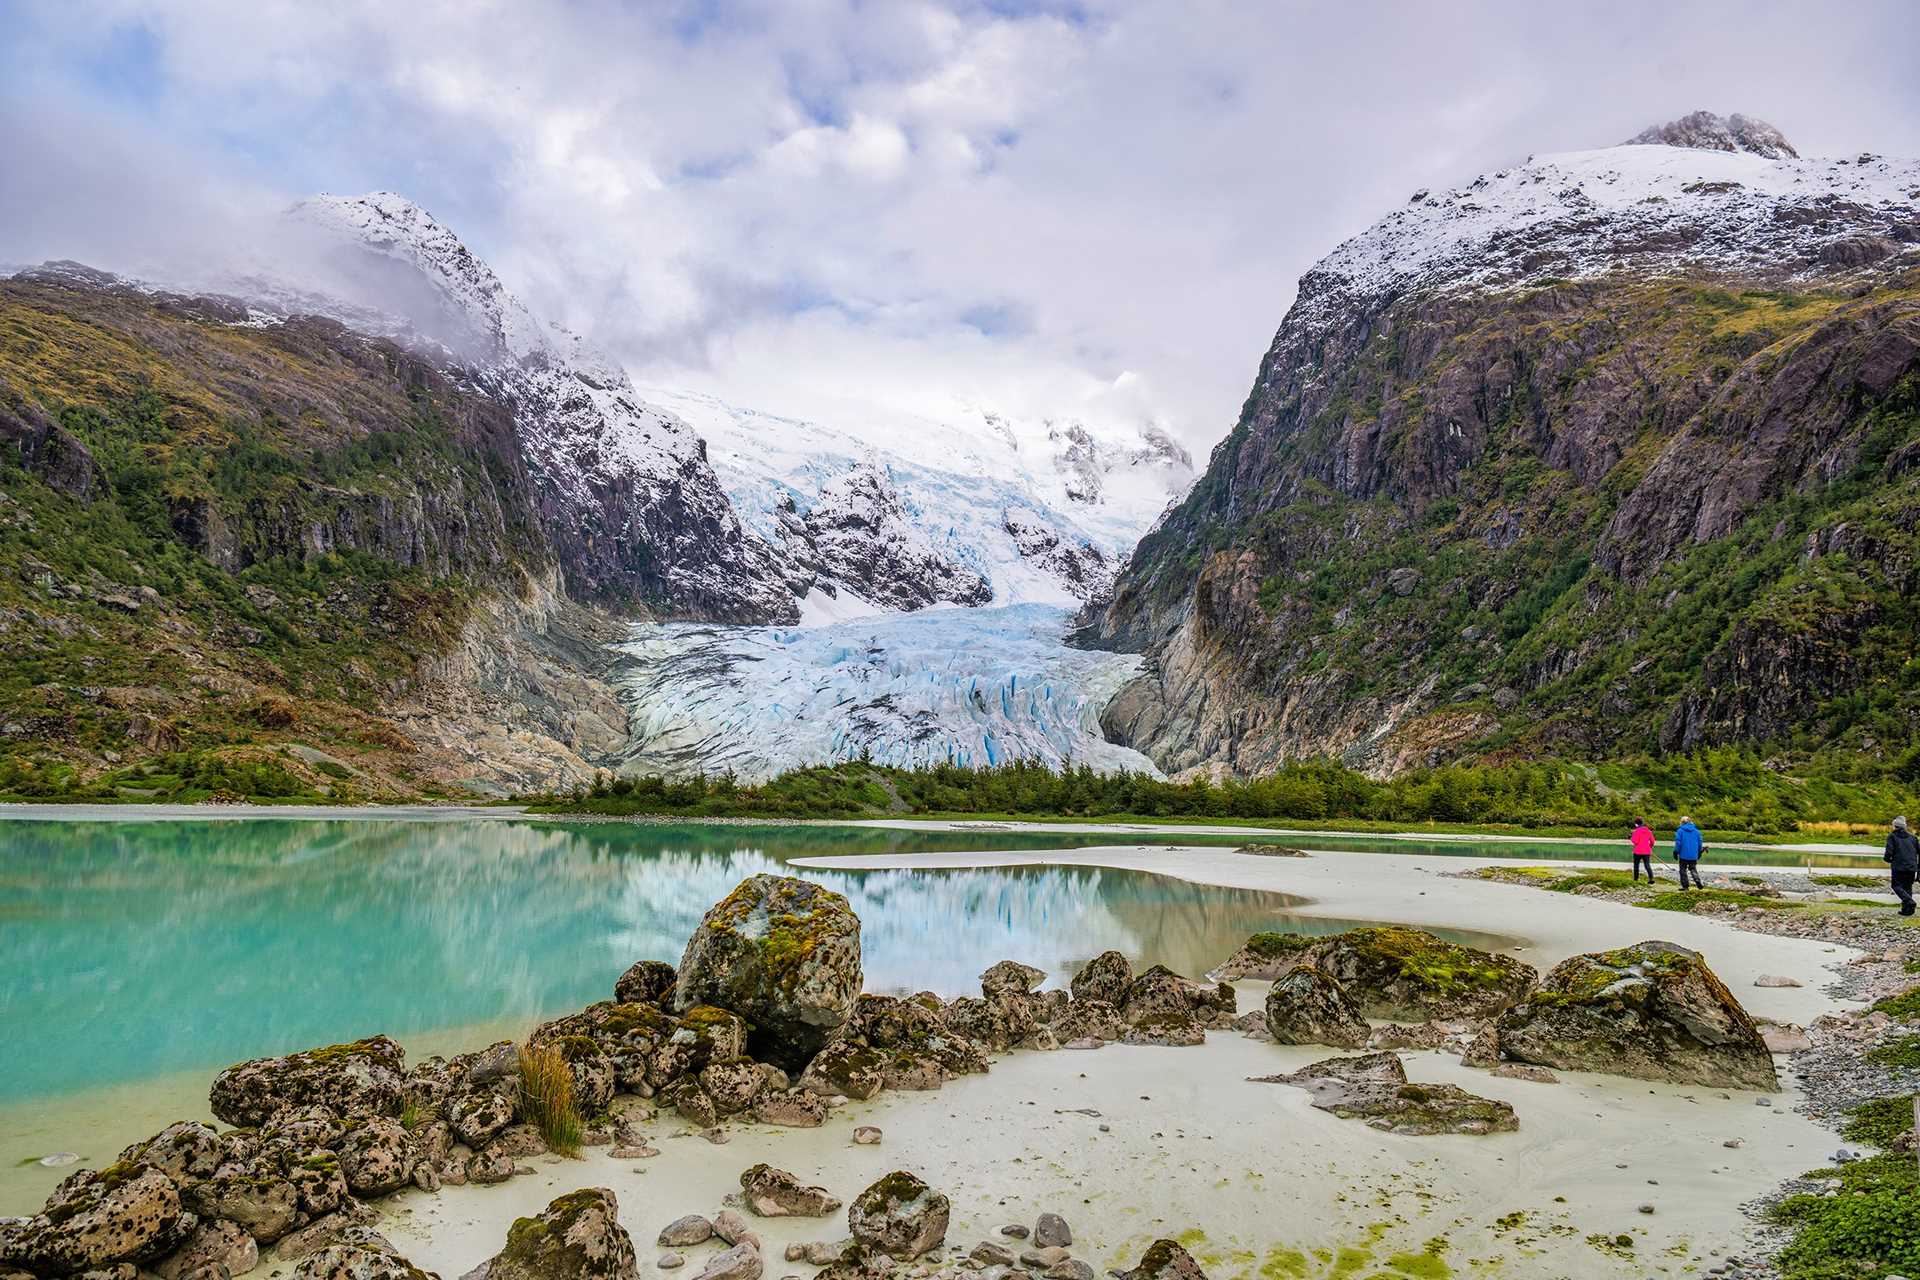 Three guests far off hike towards Bernal Glacier in Patagonia